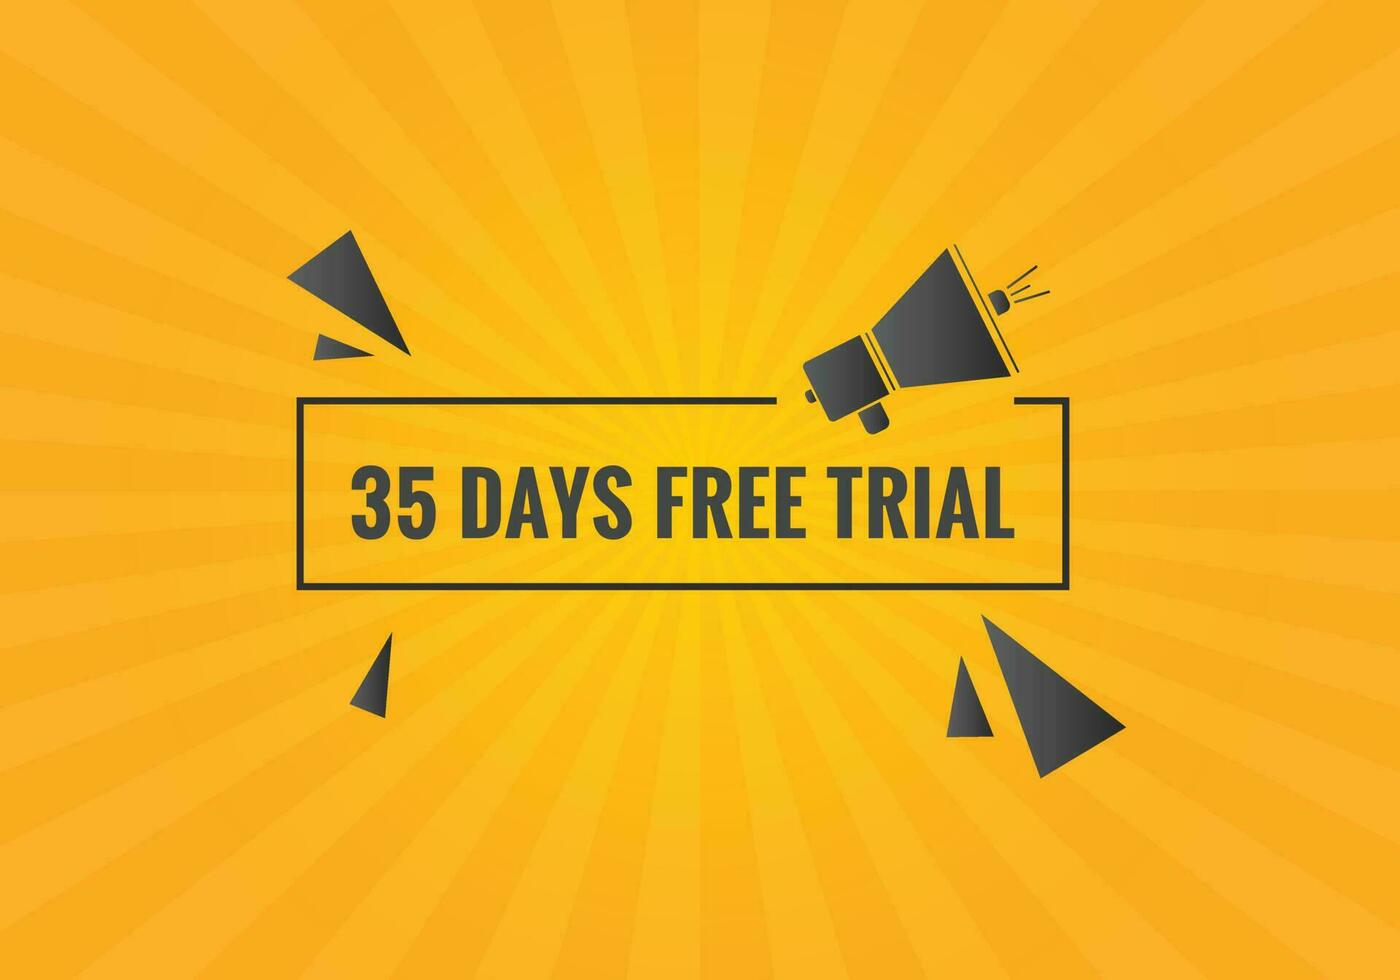 35 dagar fri rättegång baner design. 35 dag fri baner bakgrund vektor